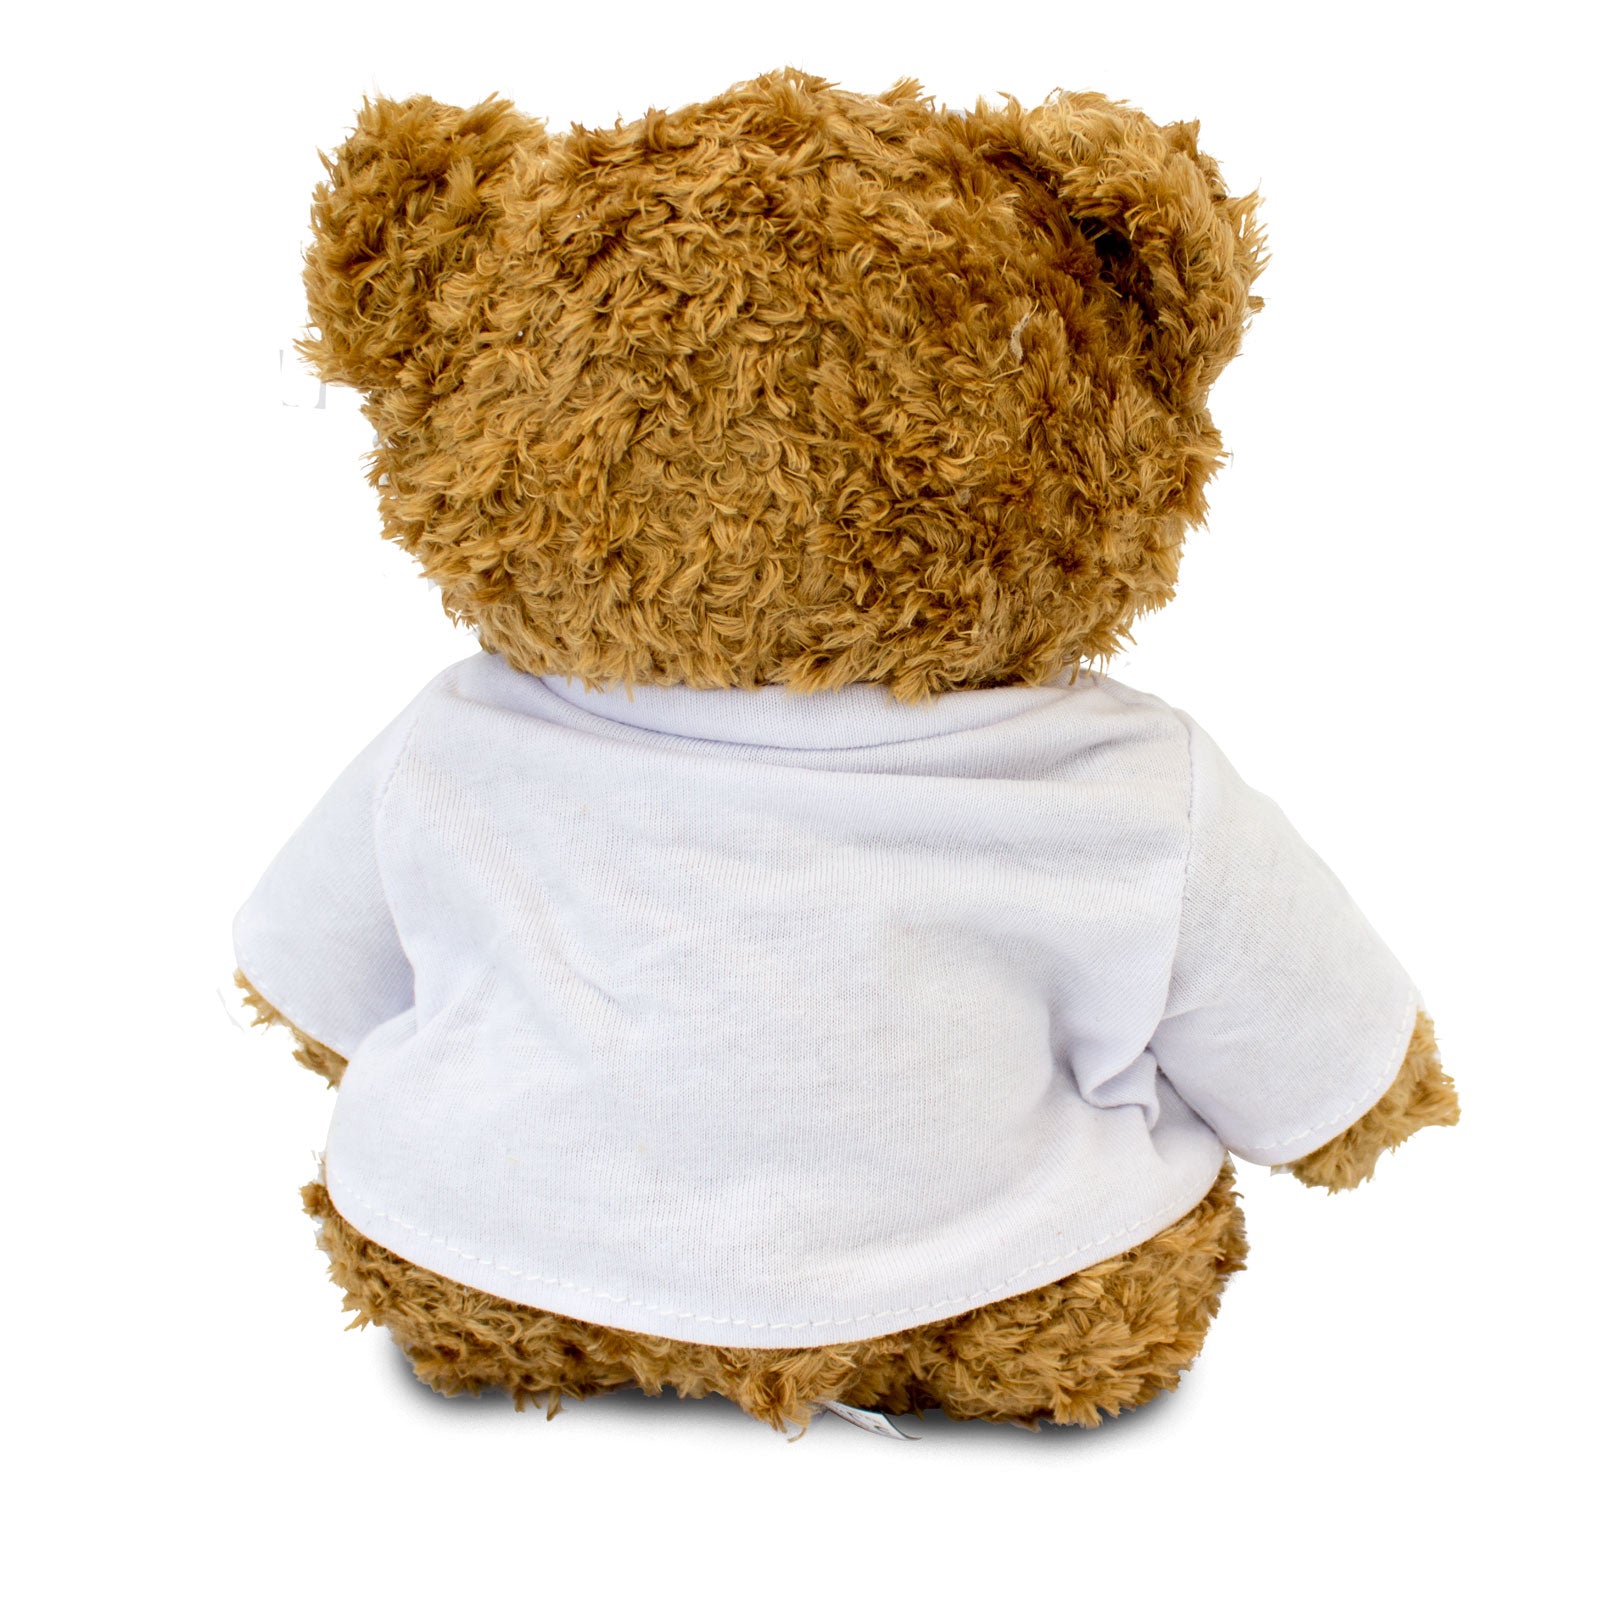 I Love Joseph - Teddy Bear